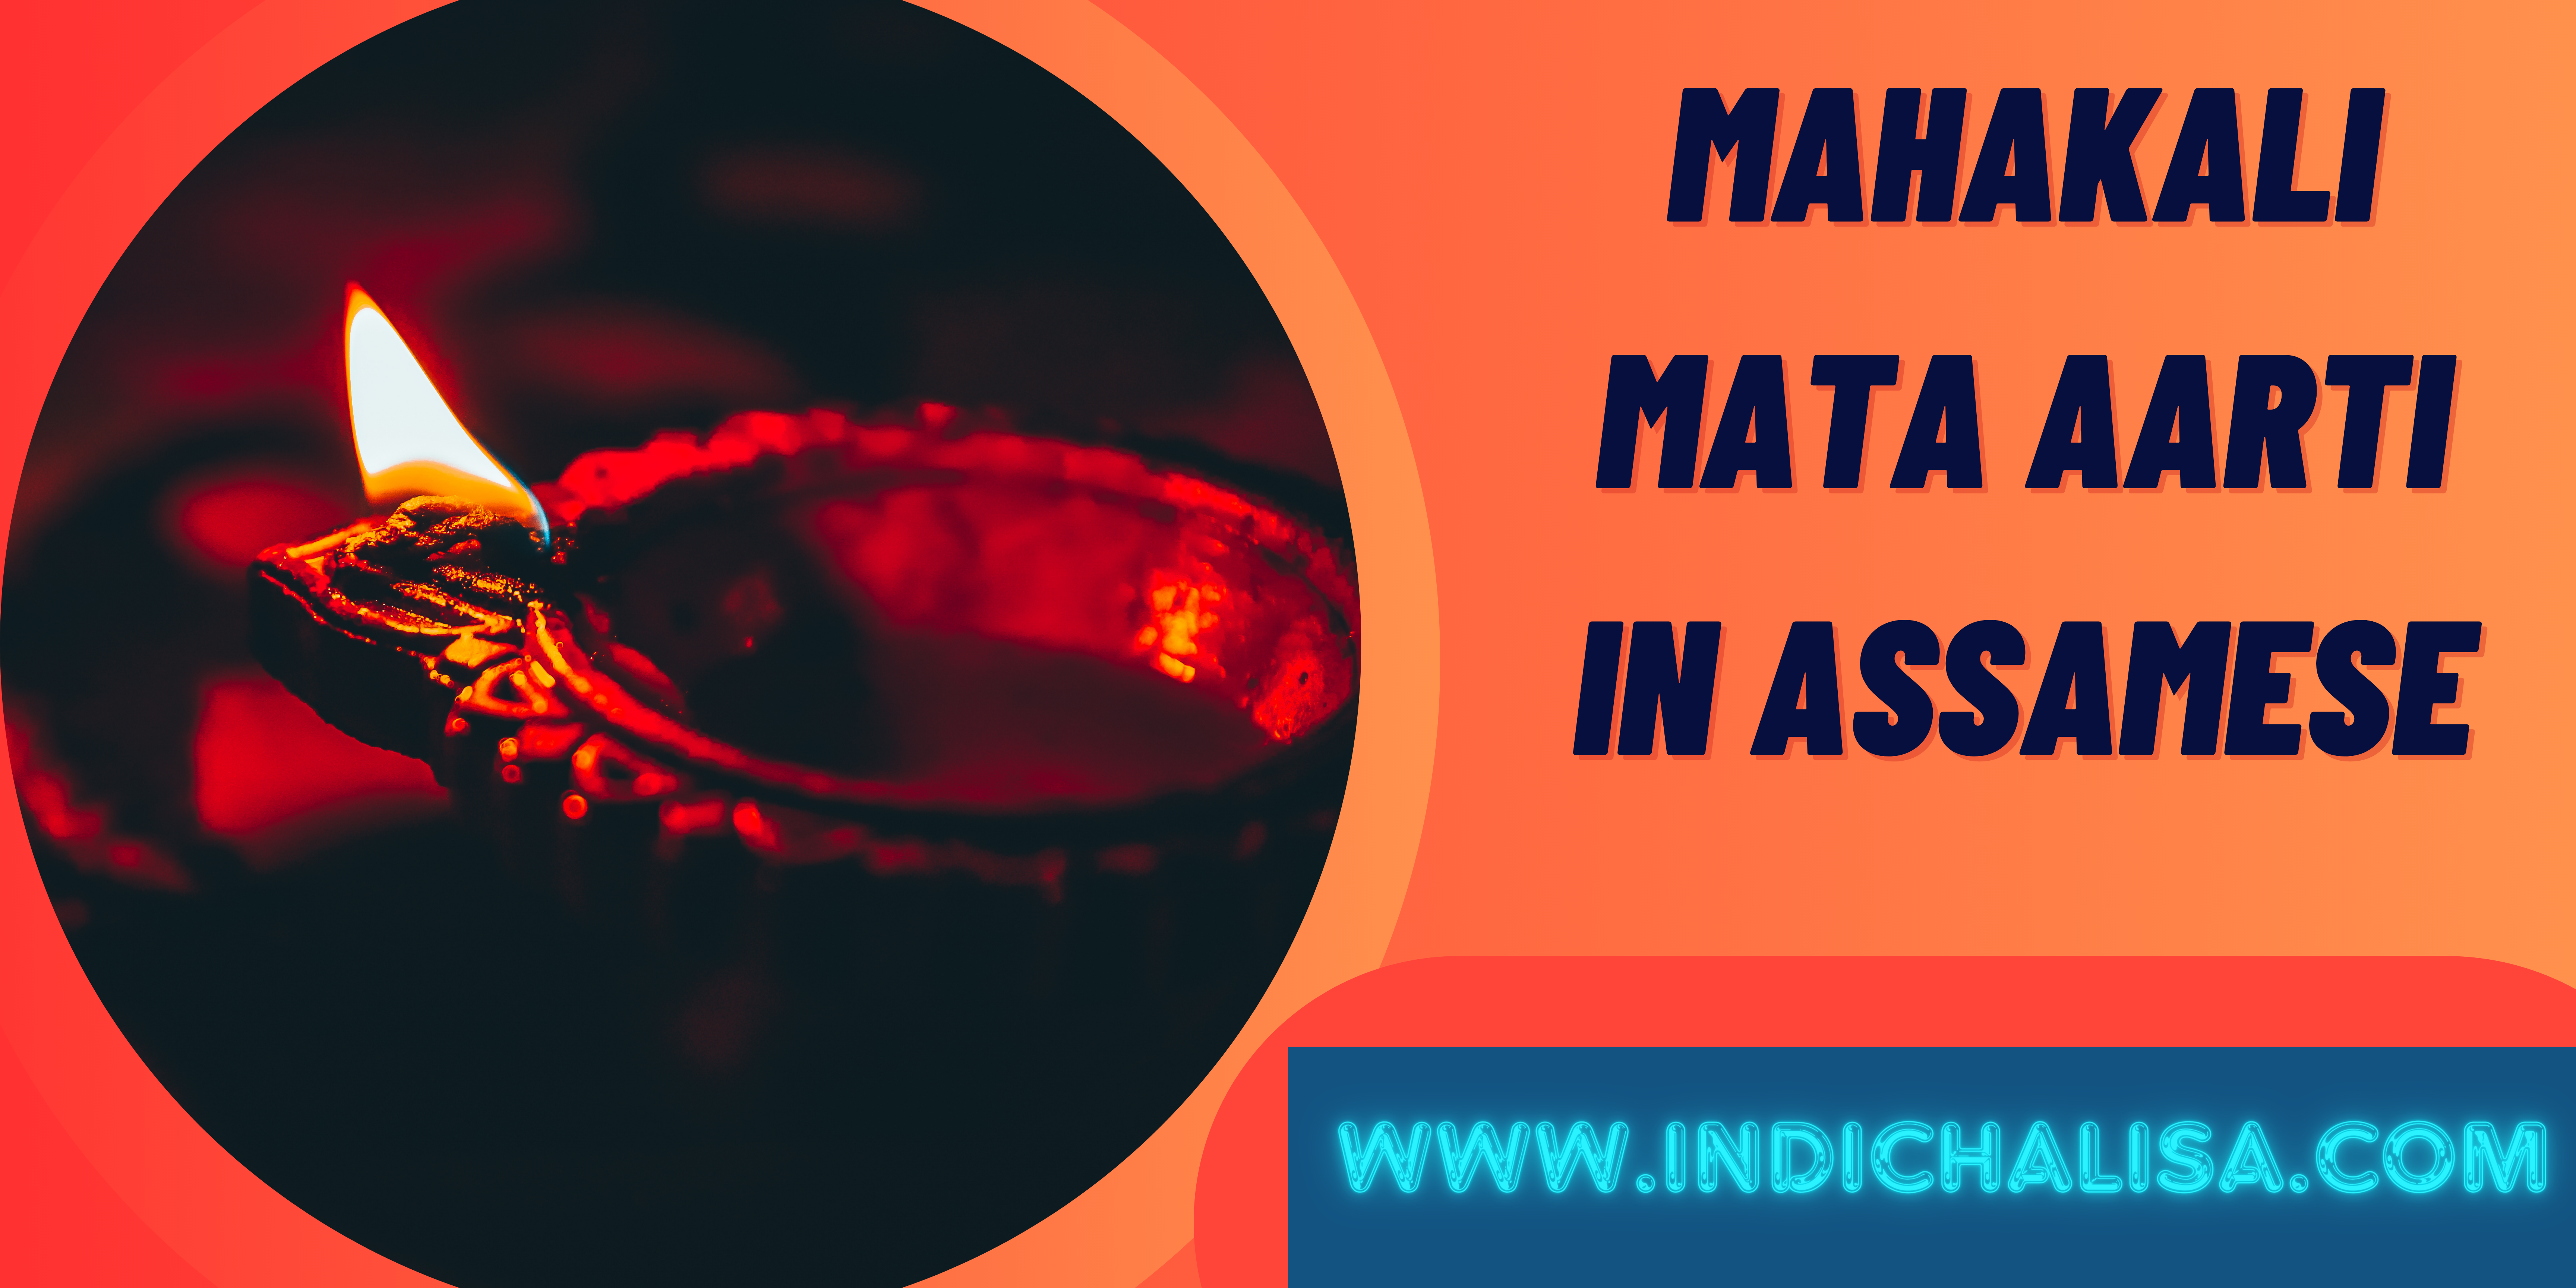 Mahakali Mata Aarti In Assamese|Mahakali Mata Aarti In Assamese|Indichalisa|Indichalisa